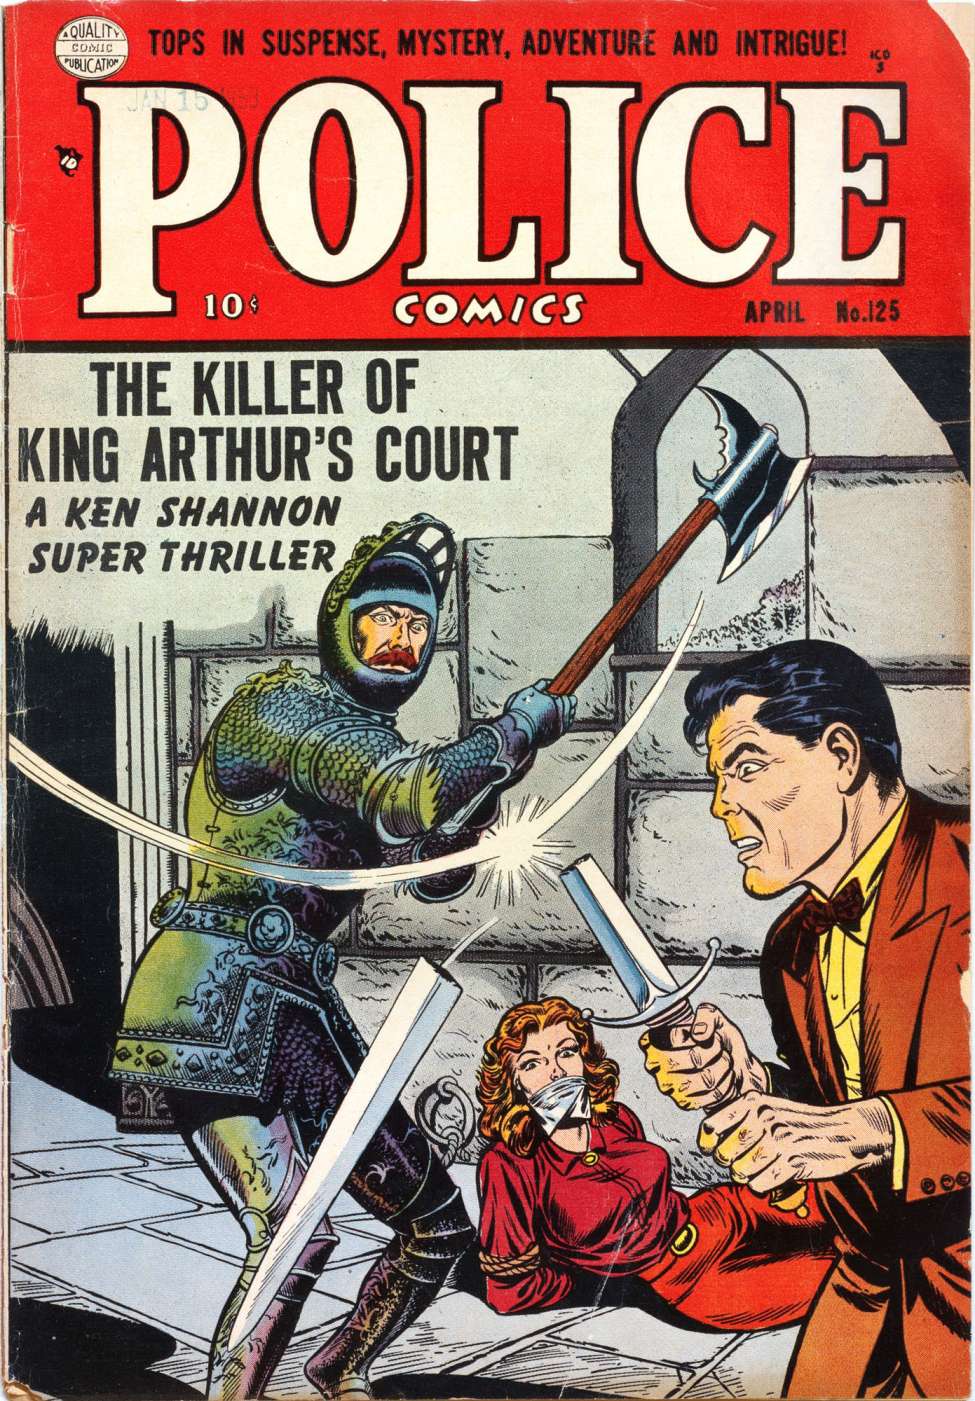 Police Comics #125, Quality